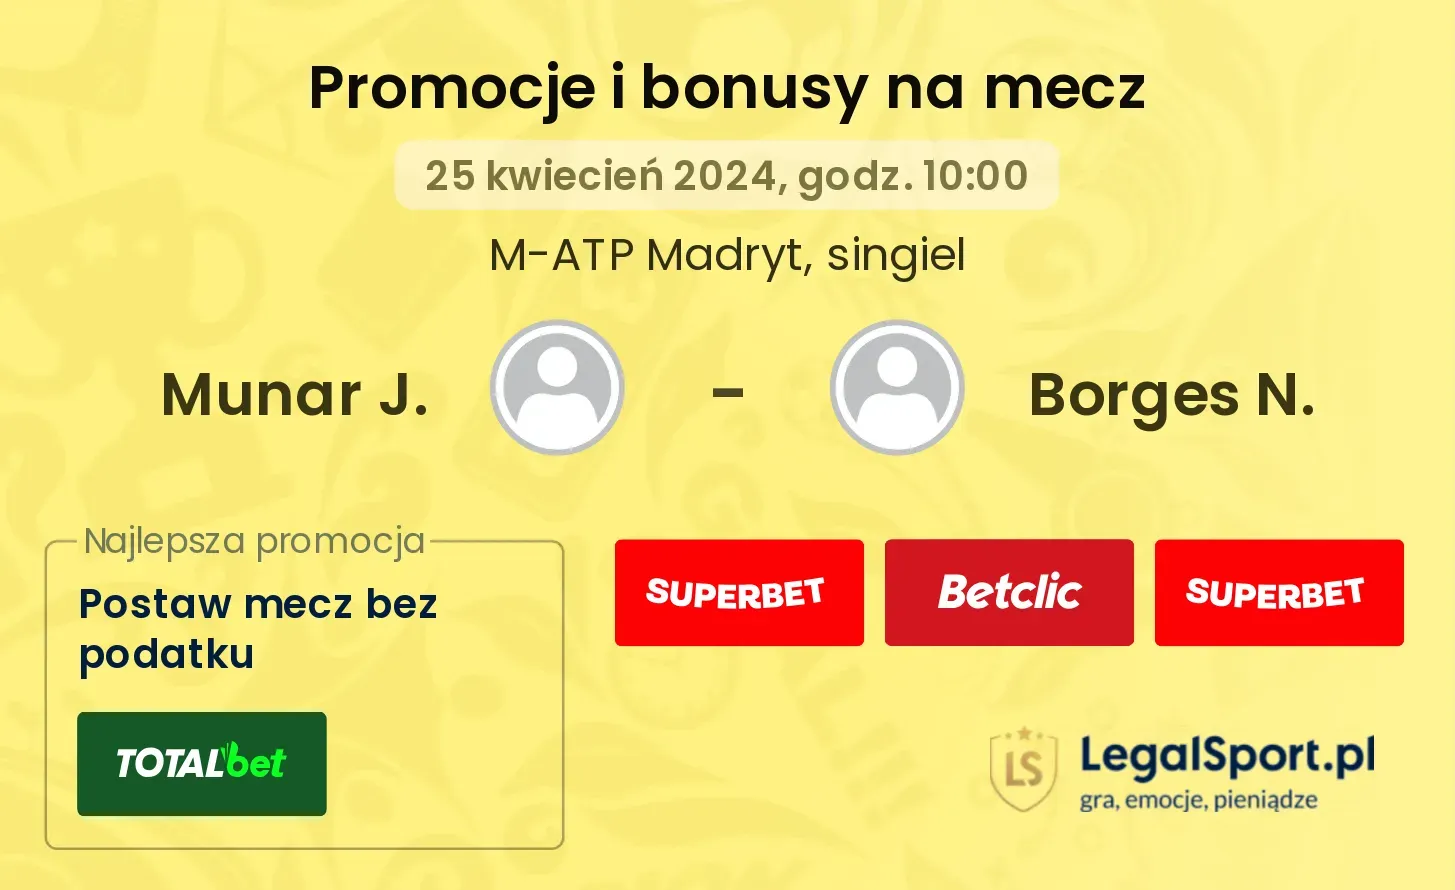 Munar J. - Borges N. promocje bonusy na mecz